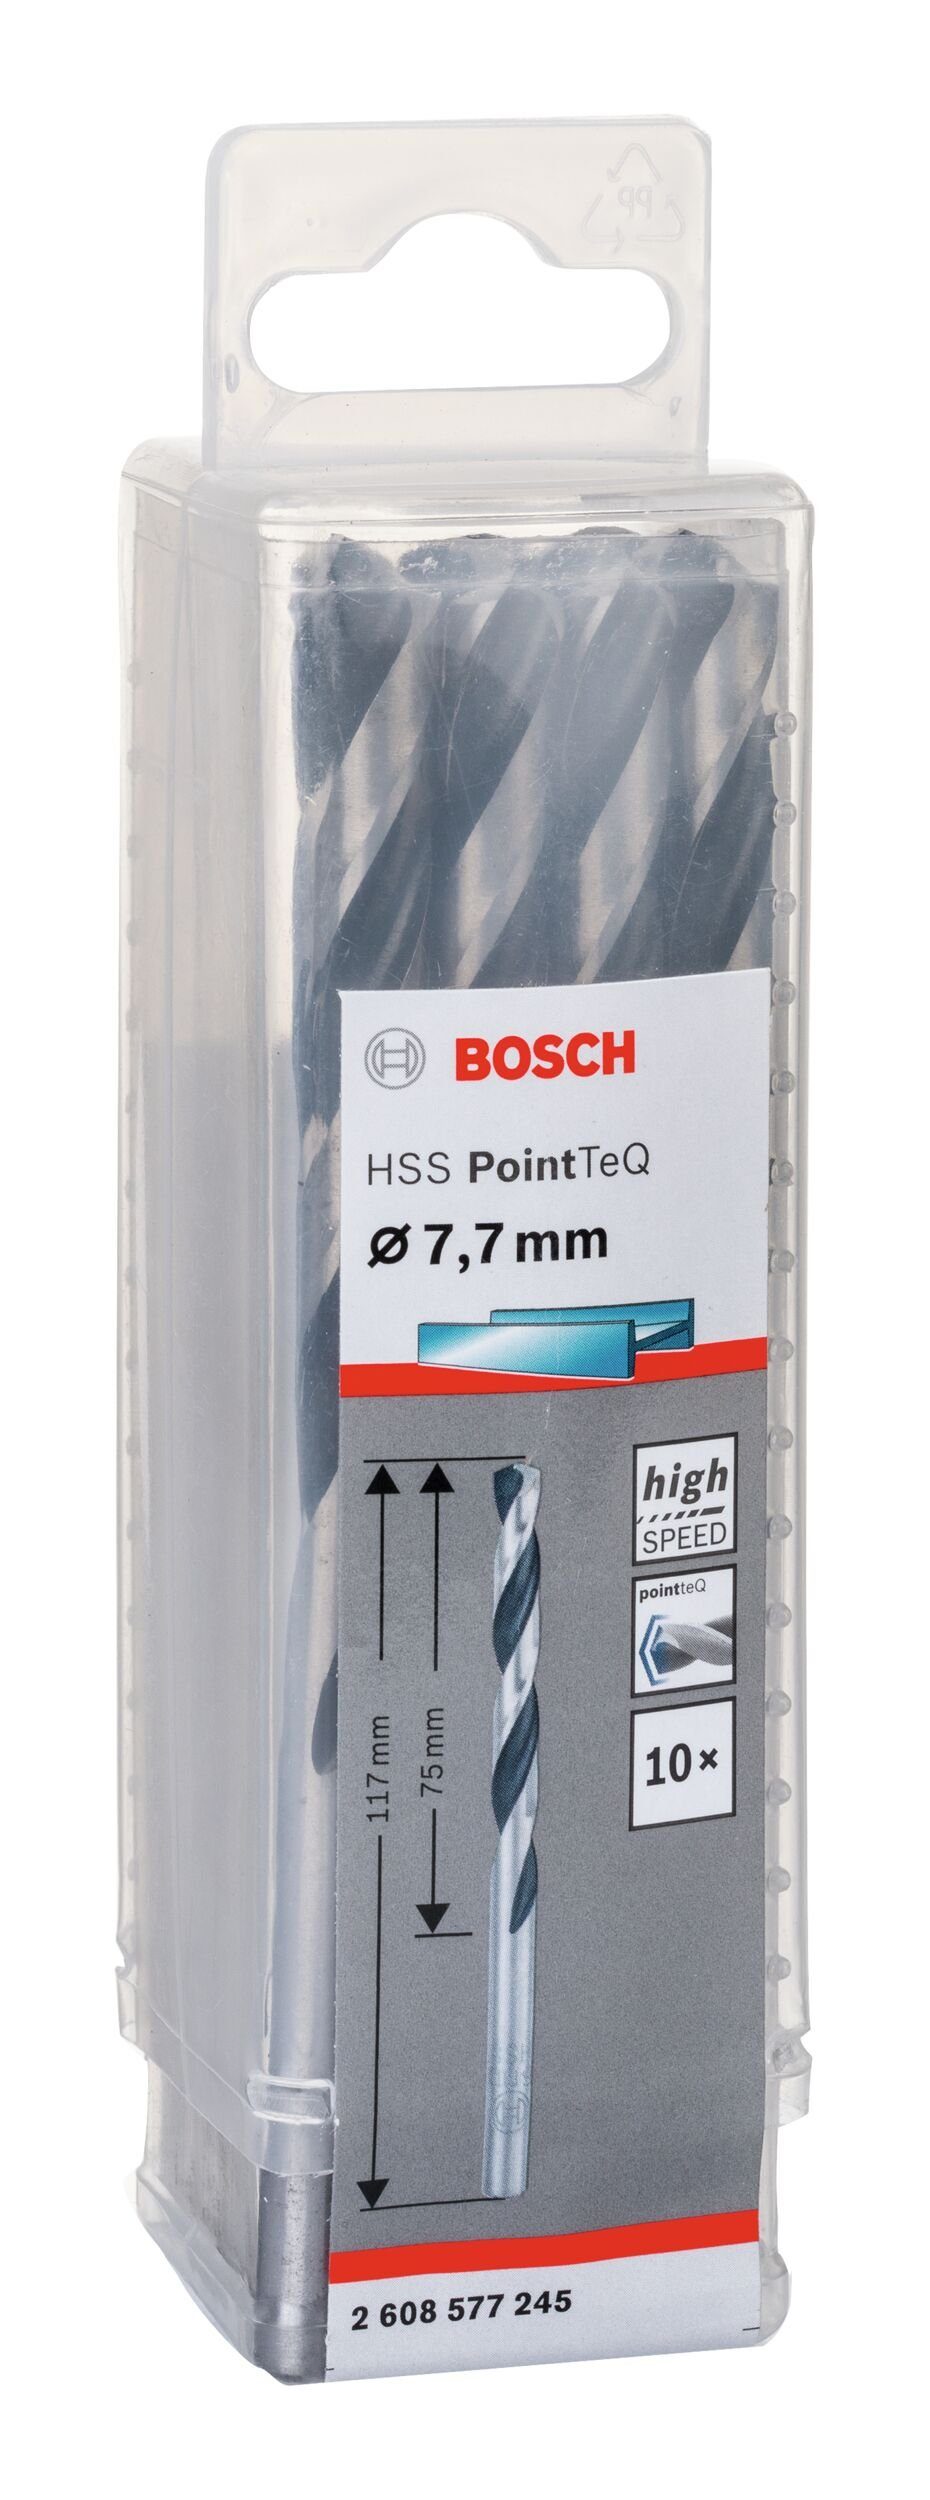 mm HSS - BOSCH (DIN 7,7 - 338) Metallbohrer, (10 Metallspiralbohrer 10er-Pack Stück), PointTeQ